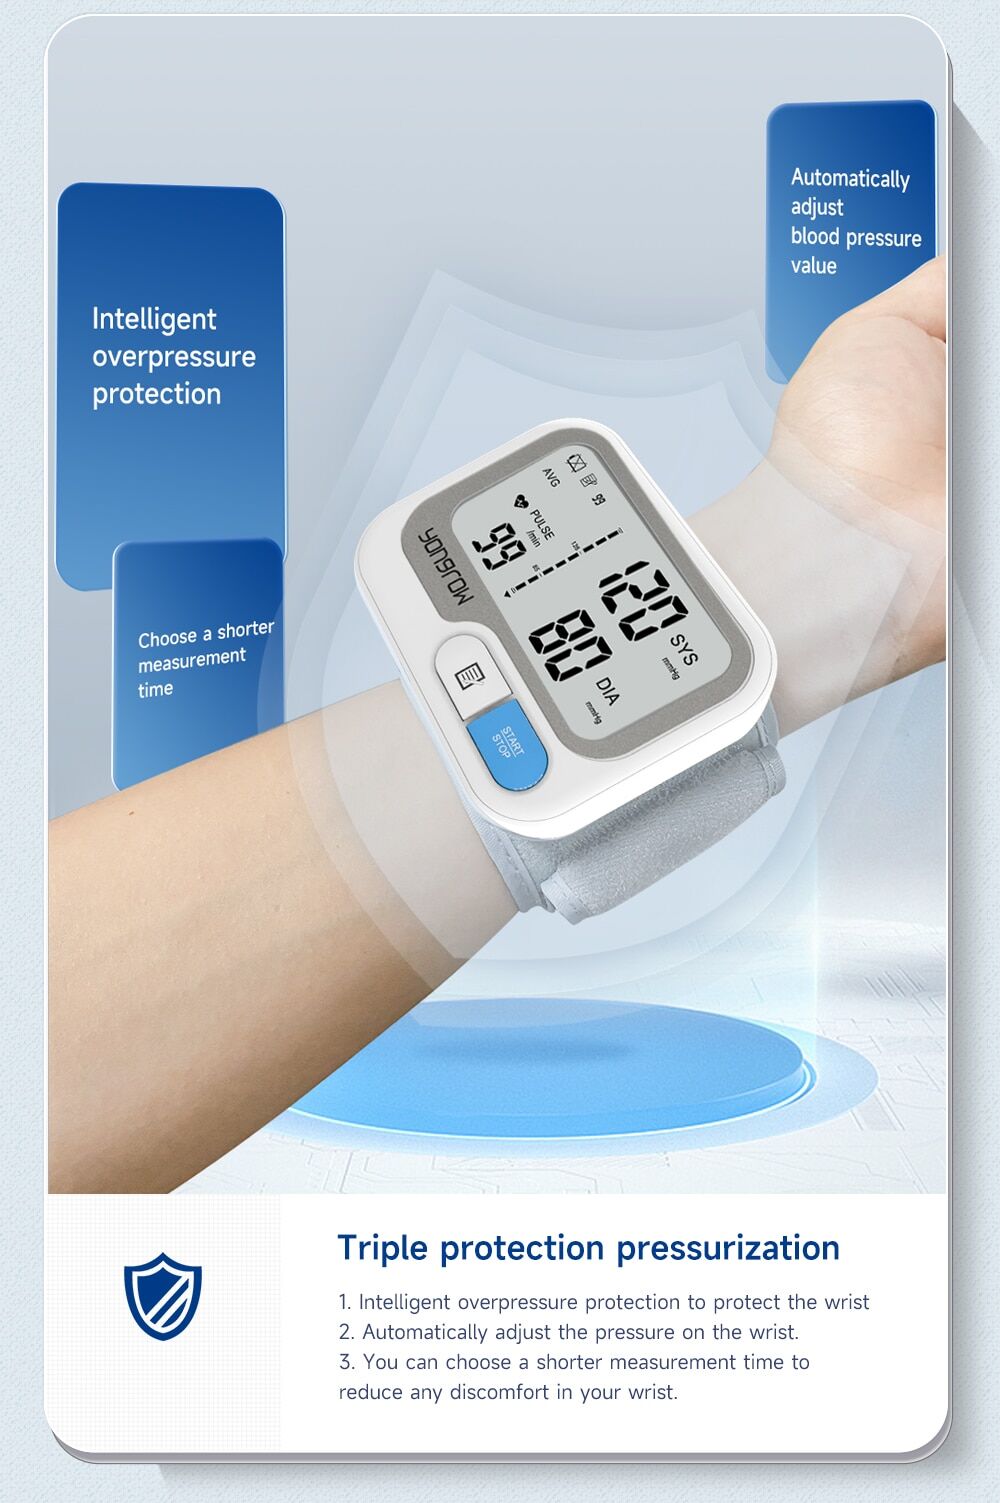 Digital wrist blood pressure monitor Yongrow YK-BPW5 € 36,79